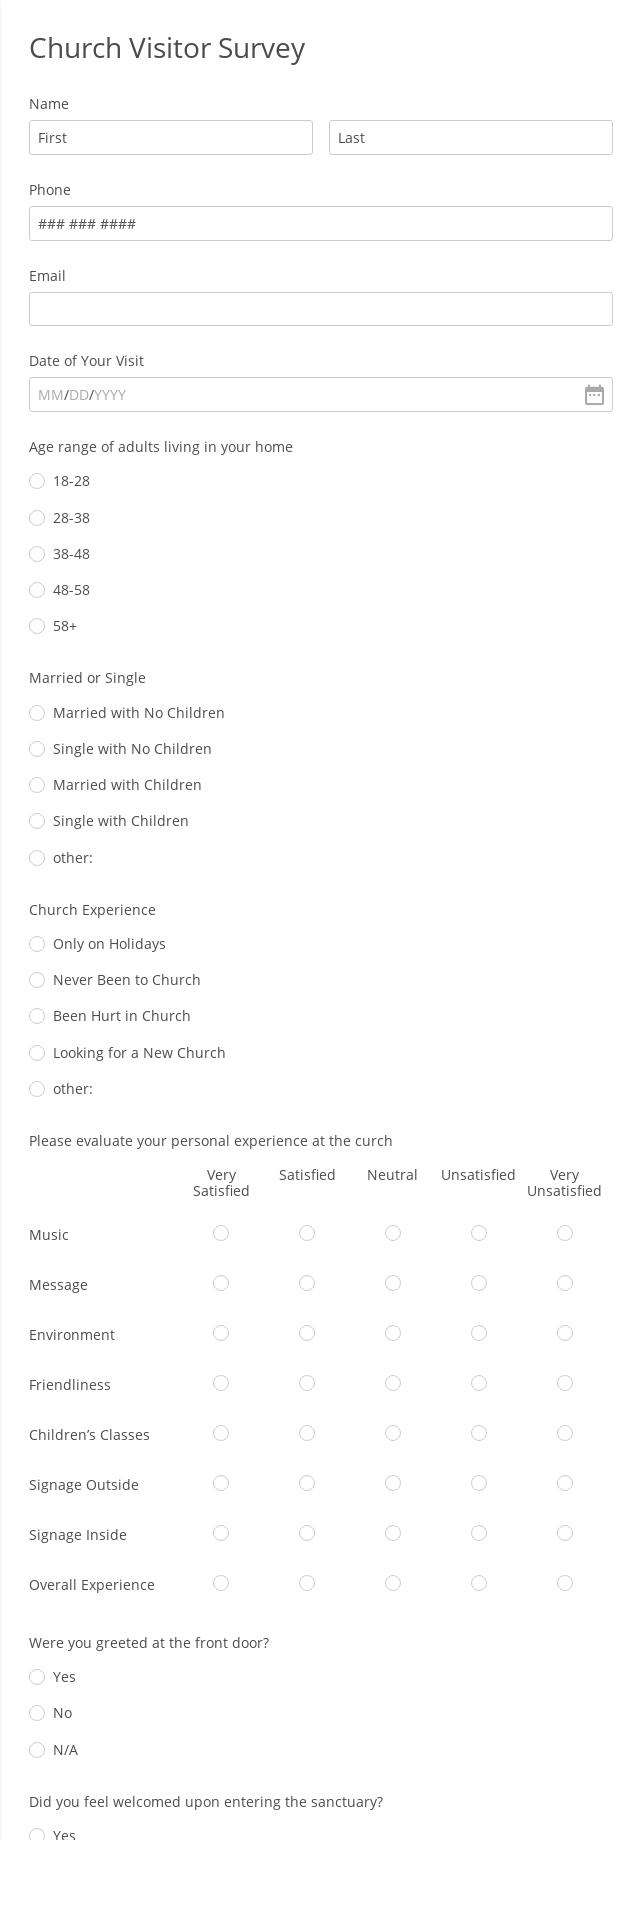 Church Visitor Survey